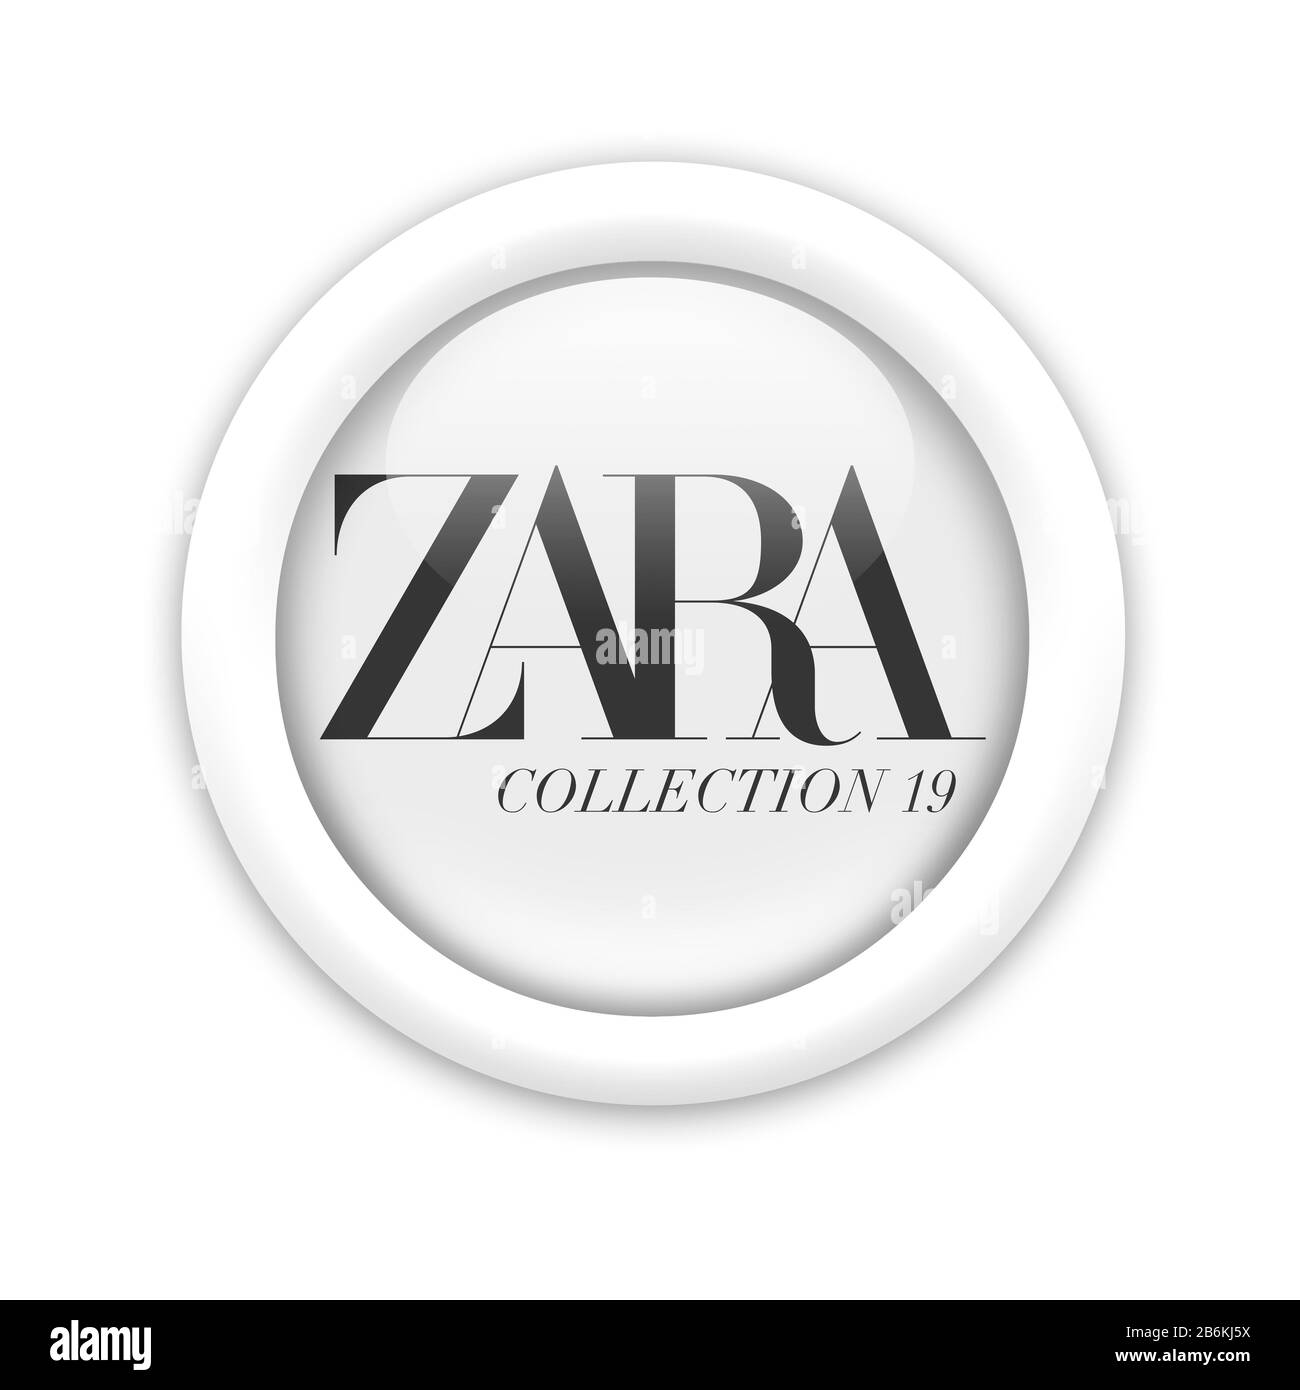 Zara Collection 19 logo Stock Photo - Alamy